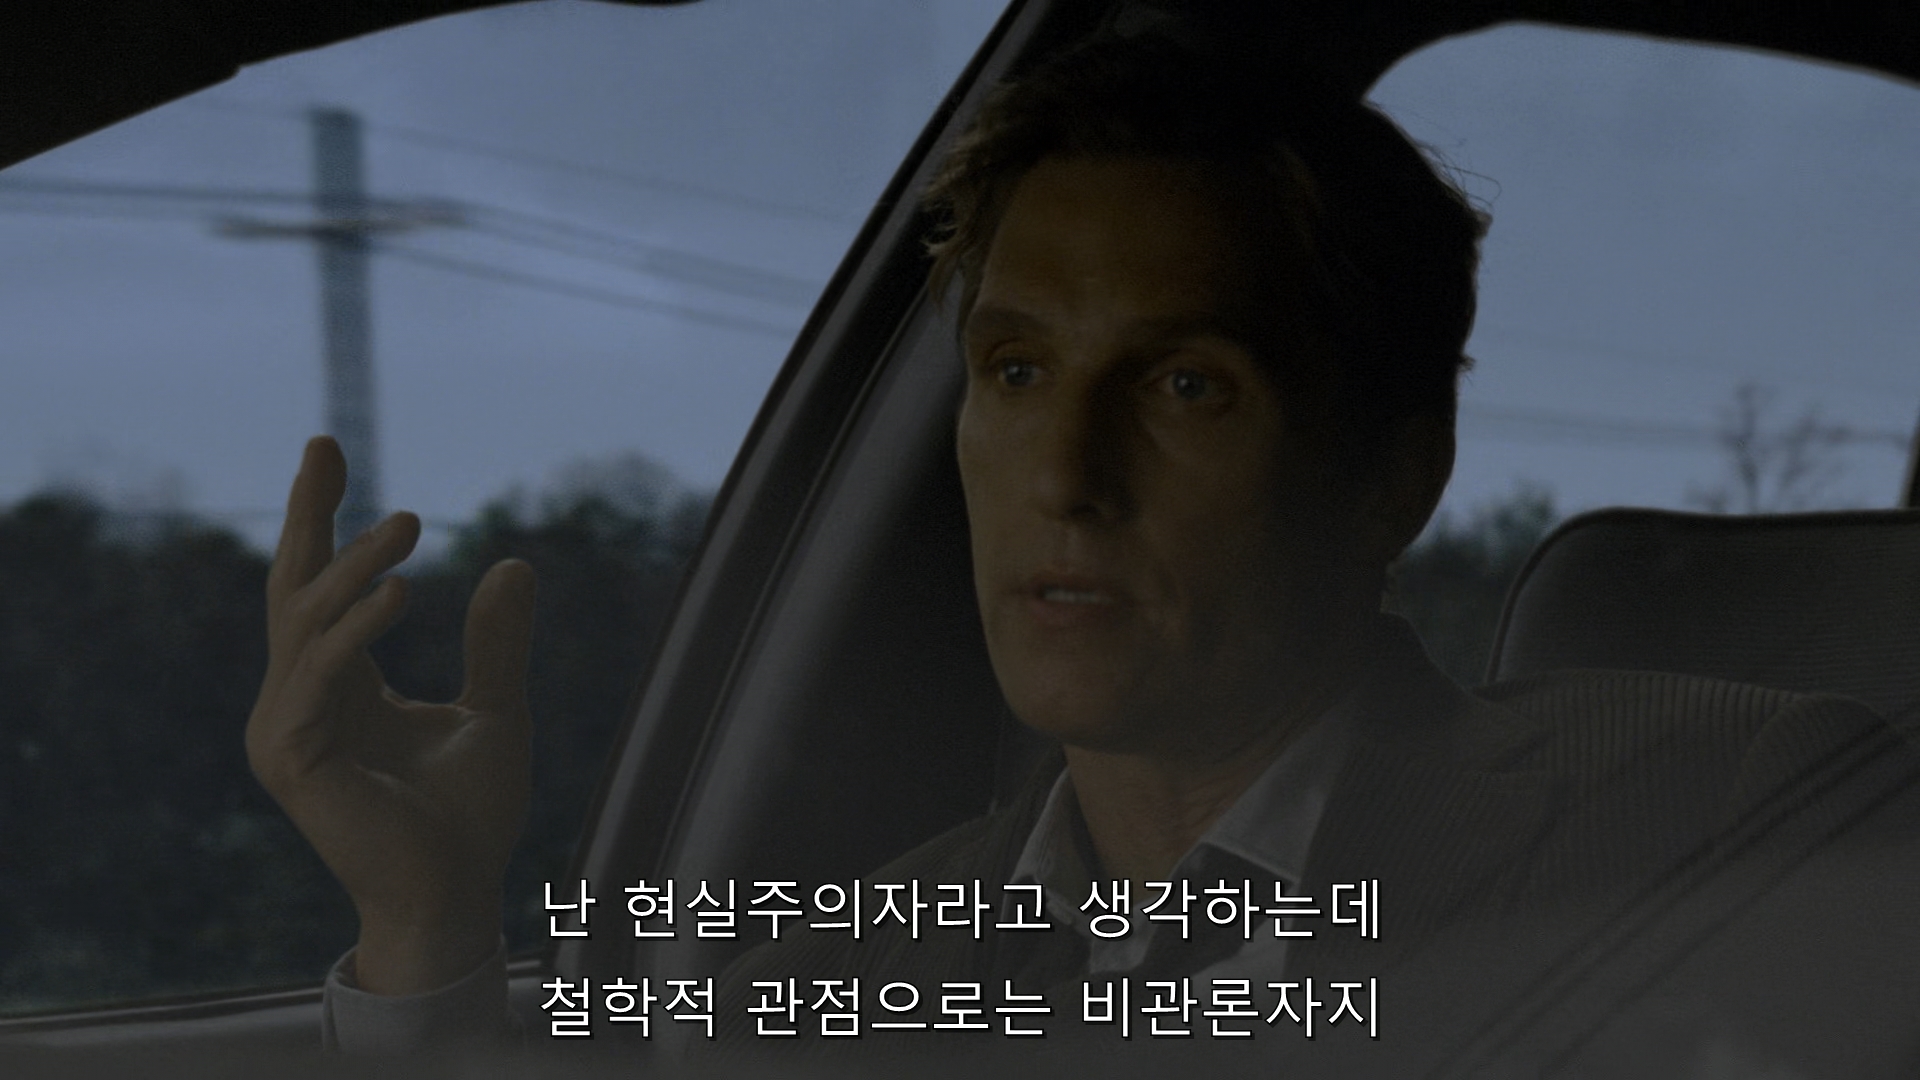 True Detective (2014) - S01E01 - The Long Bright Dark (1080p BluRay x265 afm72).mkv_000947962.jpg